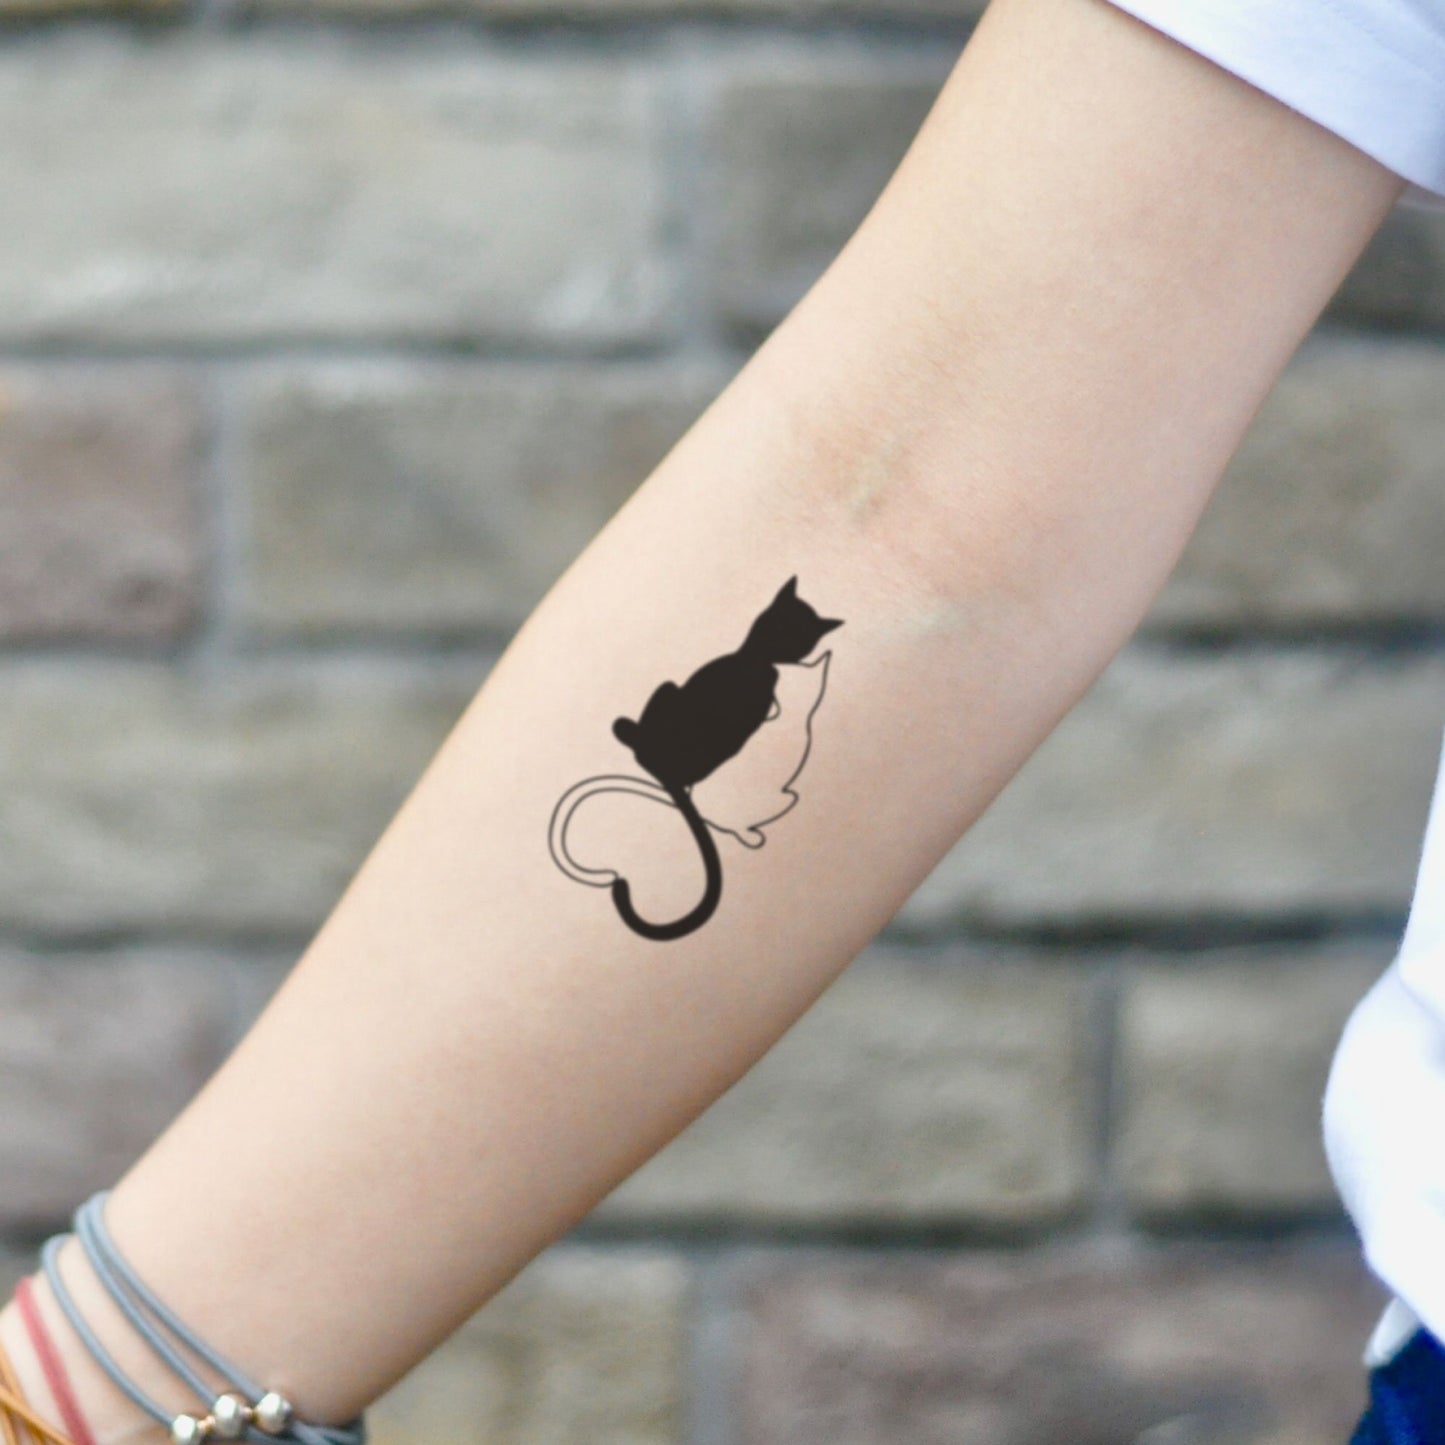 fake small couple cat tail heart shape animal temporary tattoo sticker design idea on inner arm